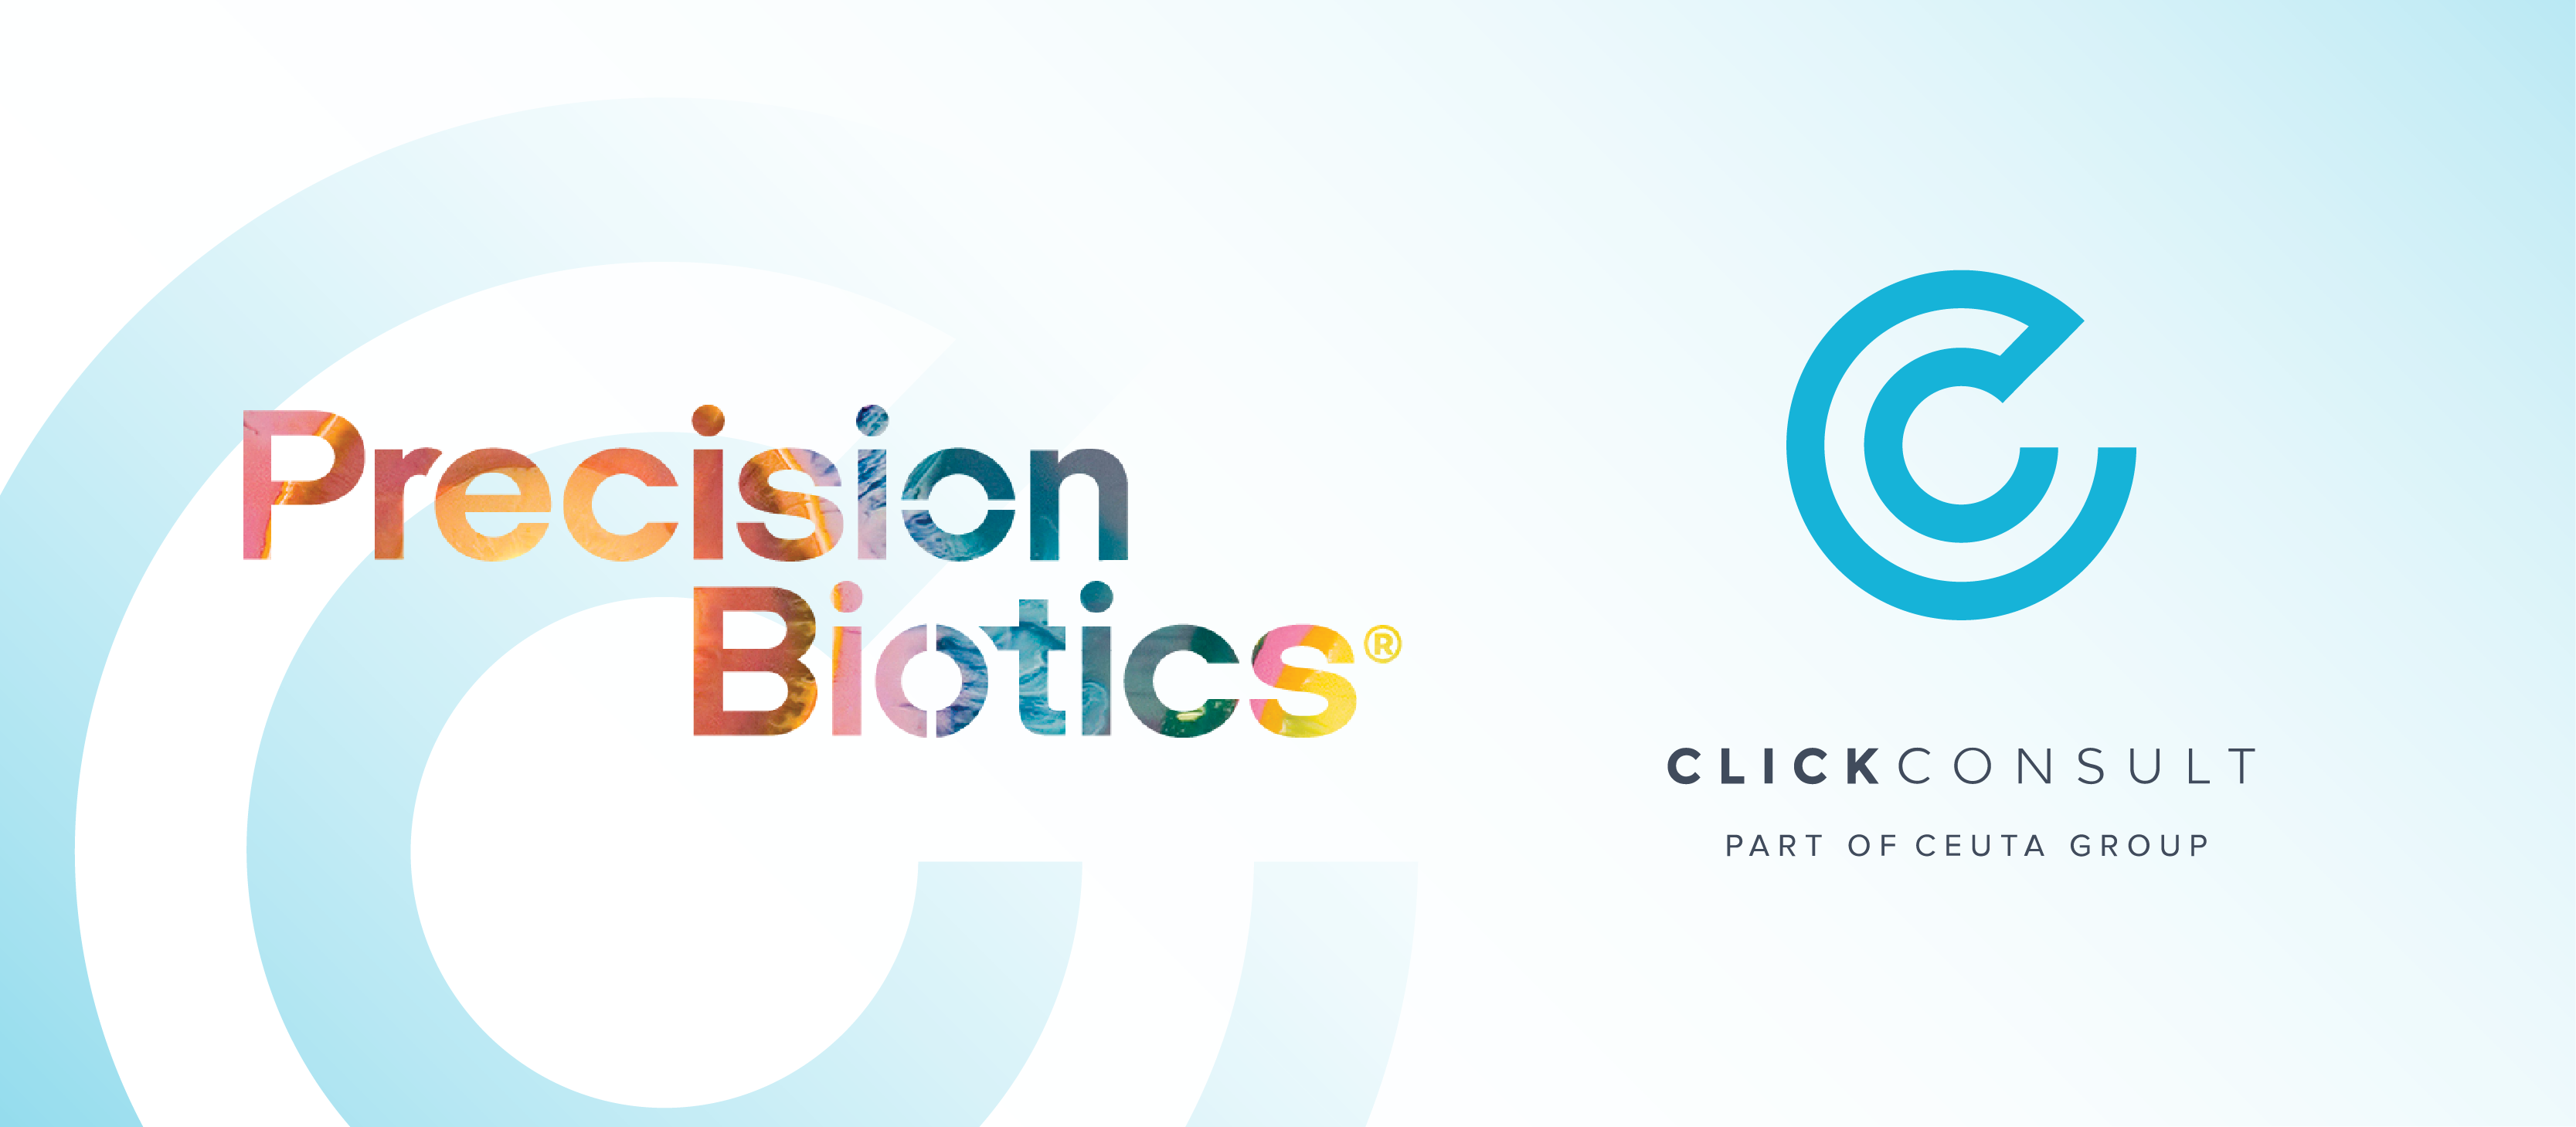 precisionbiotics-select-click-consult-to-provide-integrated-search-&-digital-marketing